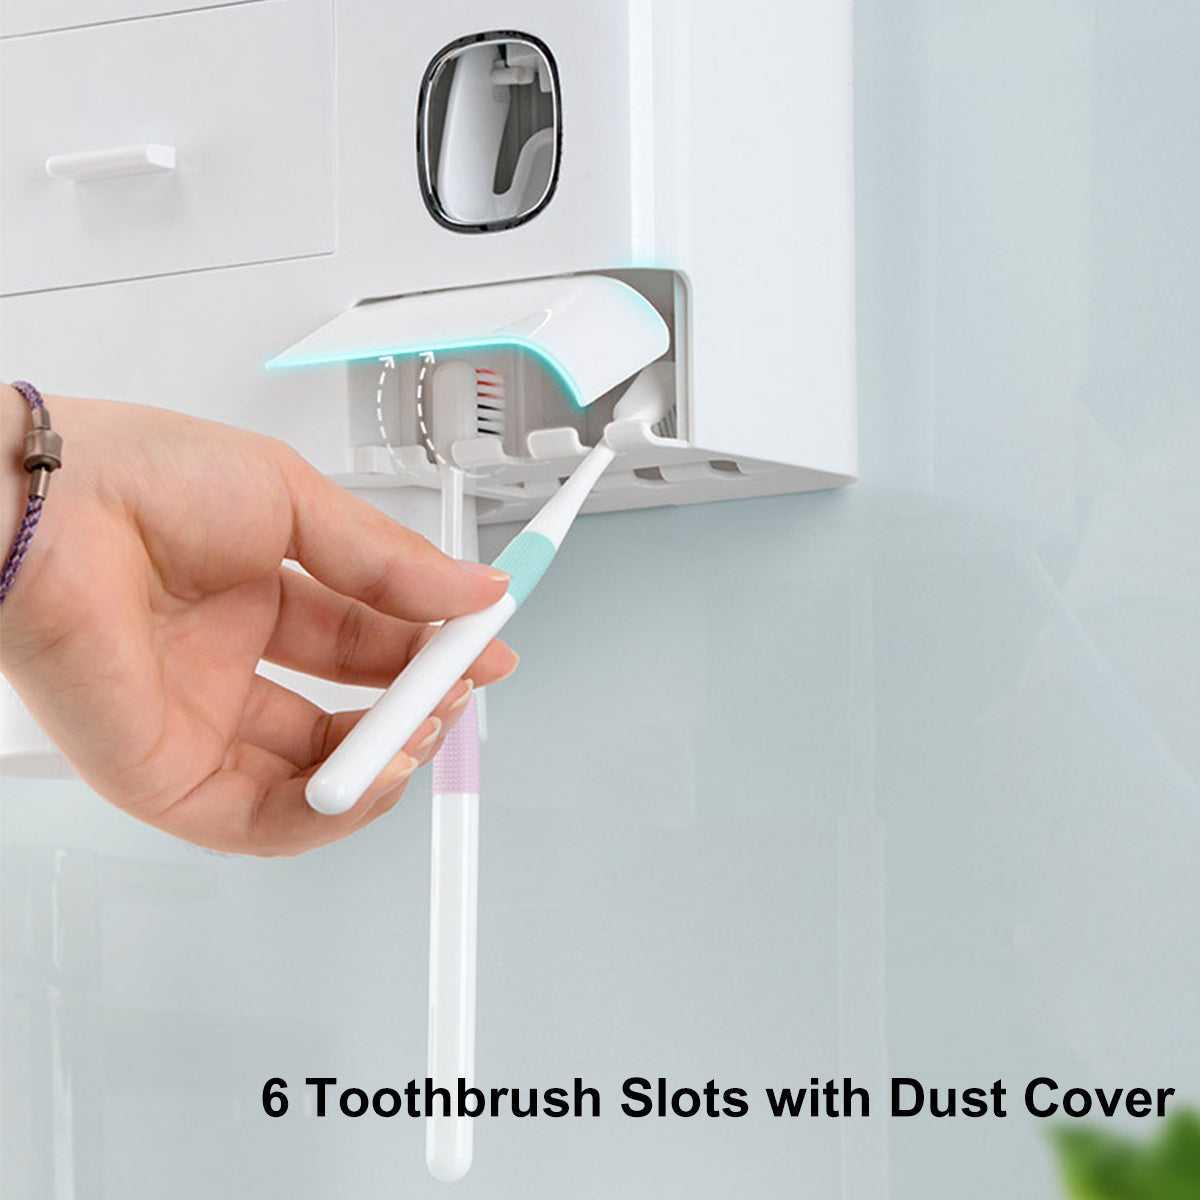 Magnetic 2 Cups Bathroom Toothbrush Holder Storage Rack Toothpaste Dispenser B-SPIN